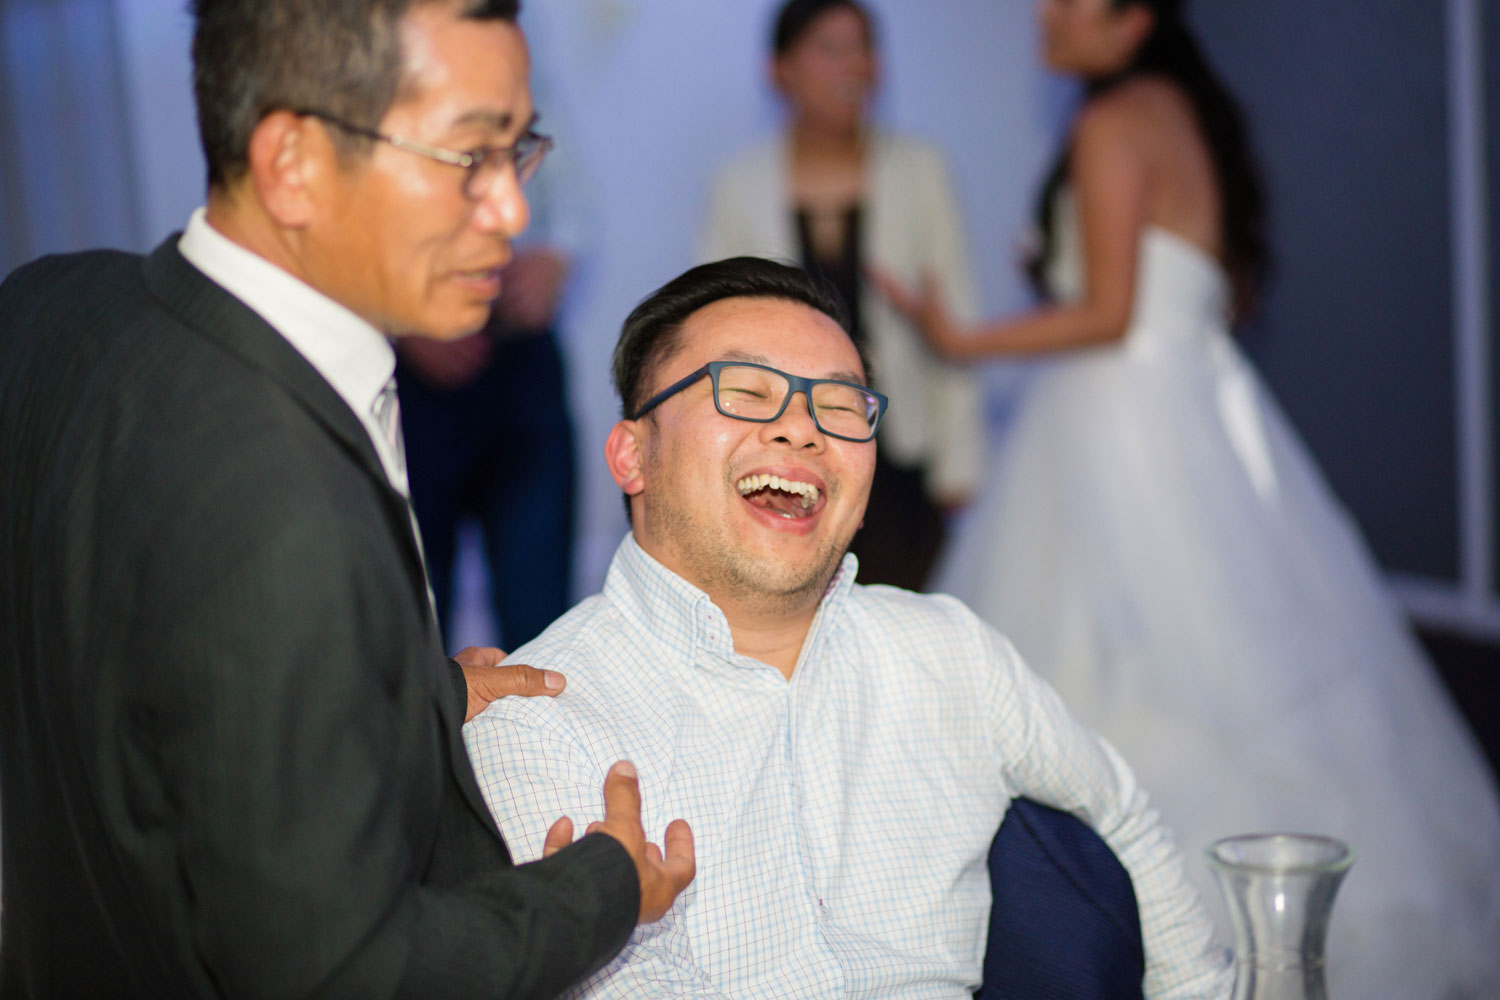 castaways waiuku wedding guest laughing